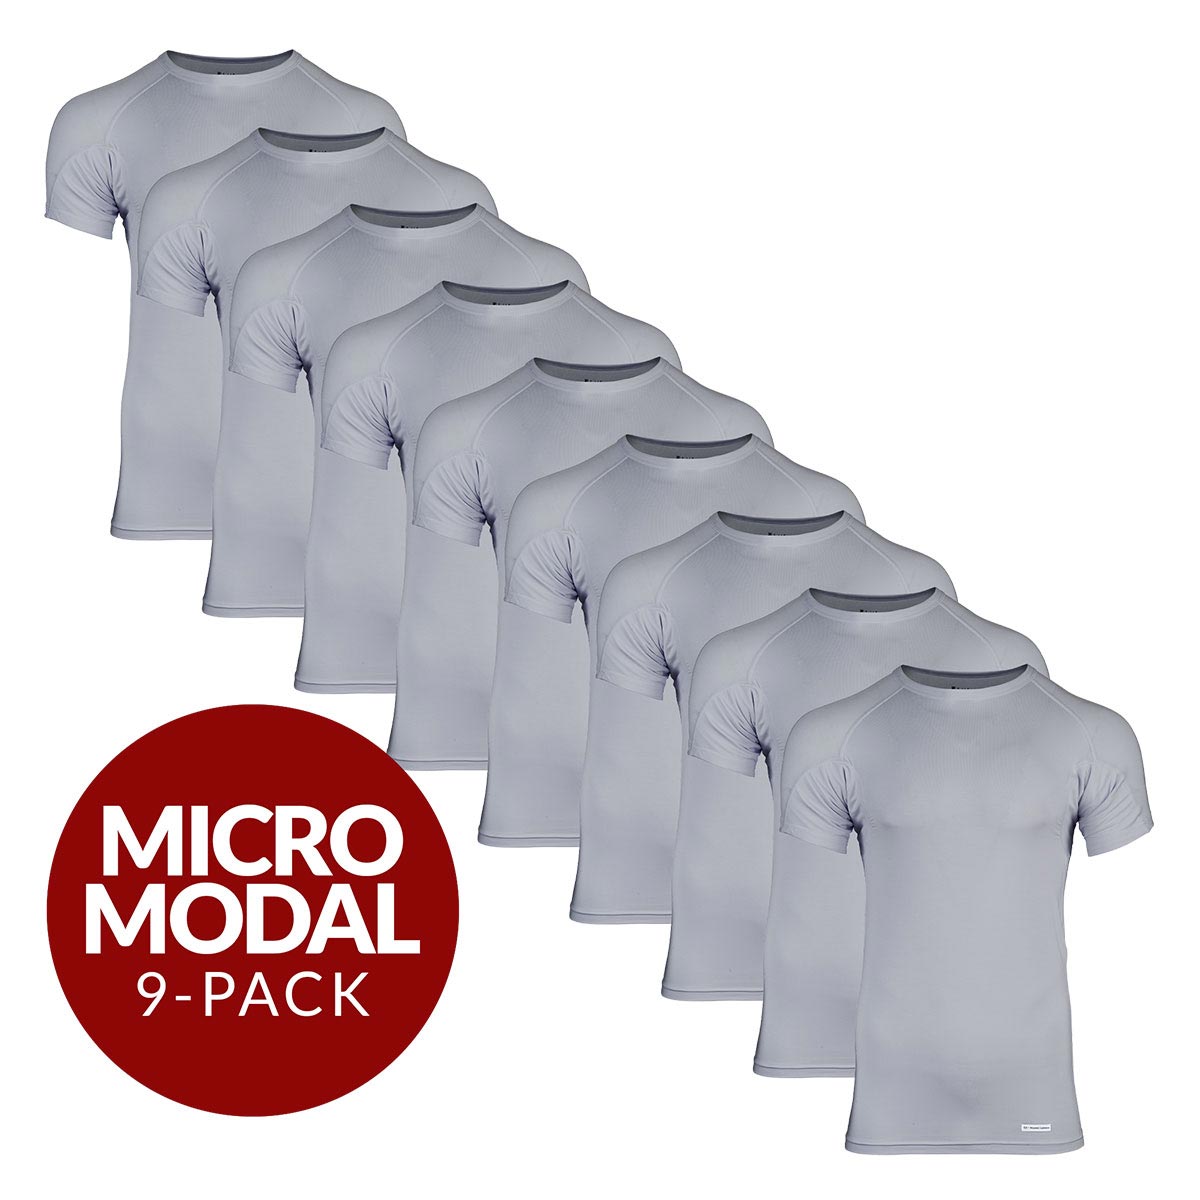 Crew Neck Micro Modal Sweat Proof Undershirt For Men - Grey 9-Pack - Ejis